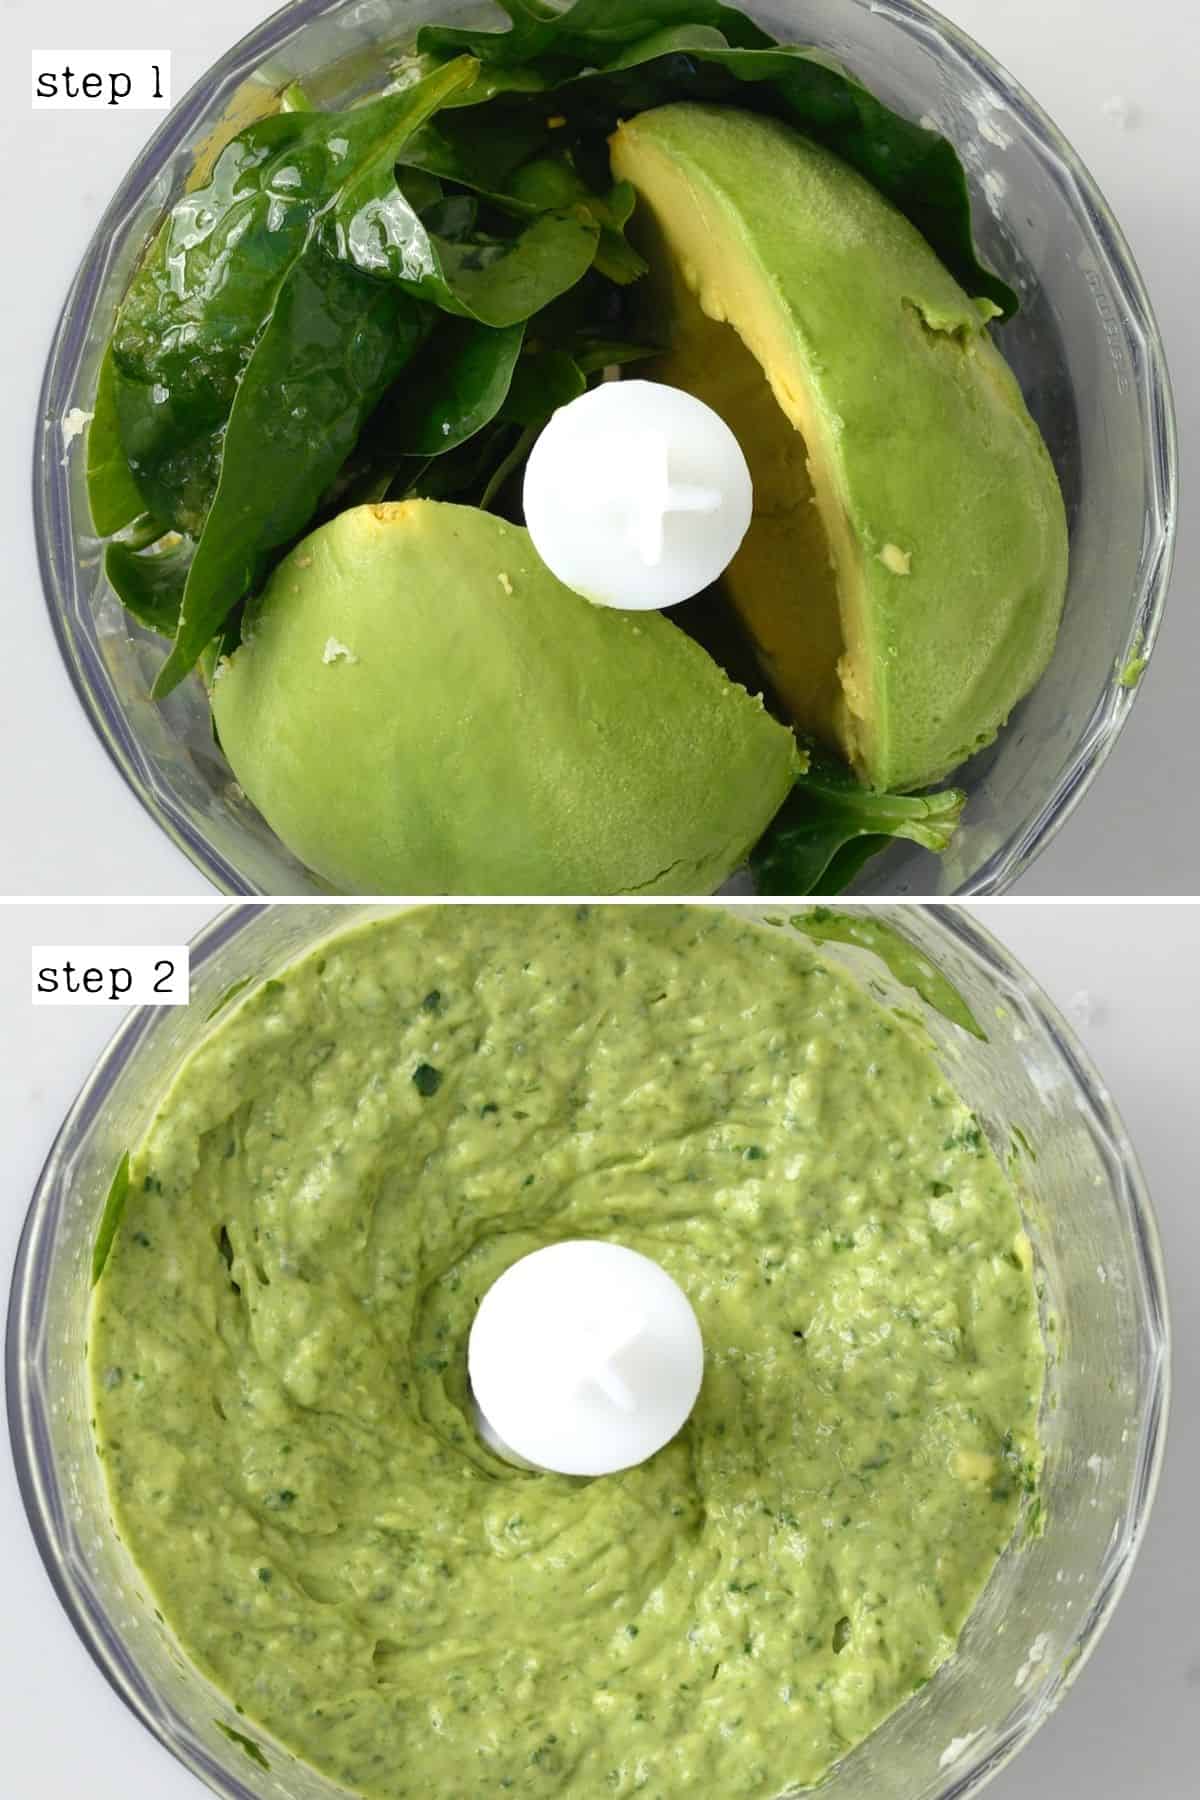 Steps for making avocado salad dressing